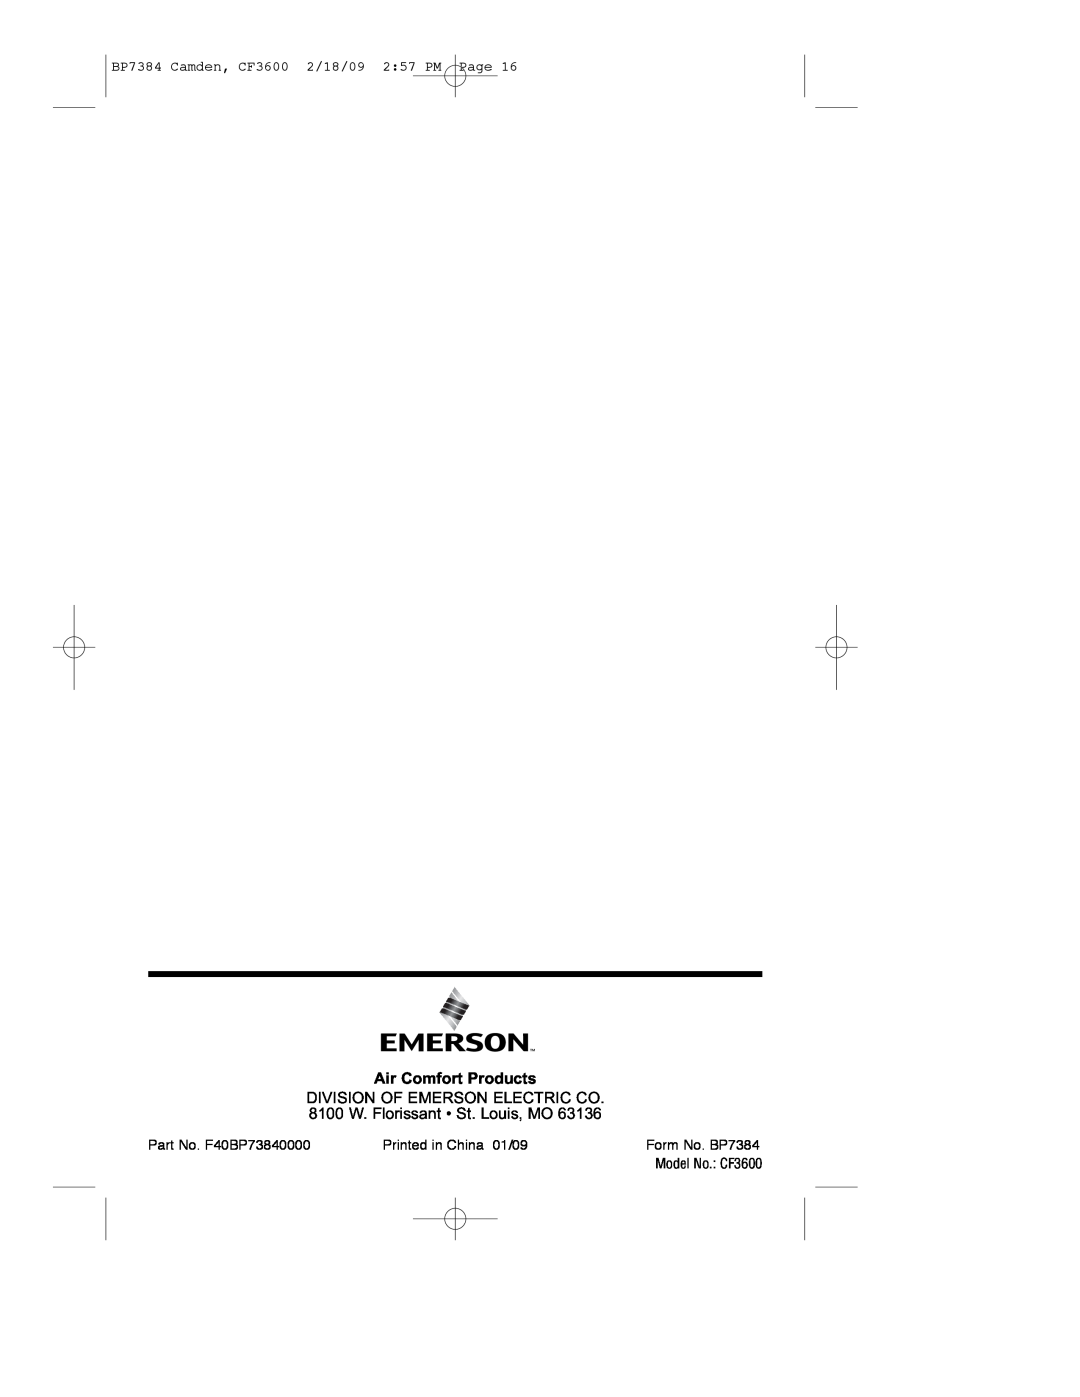 Emerson CF3600AP Air Comfort Products, BP7384 Camden, CF3600 2/18/09 2 57 PM Page, Part No. F40BP73840000, Form No. BP7384 